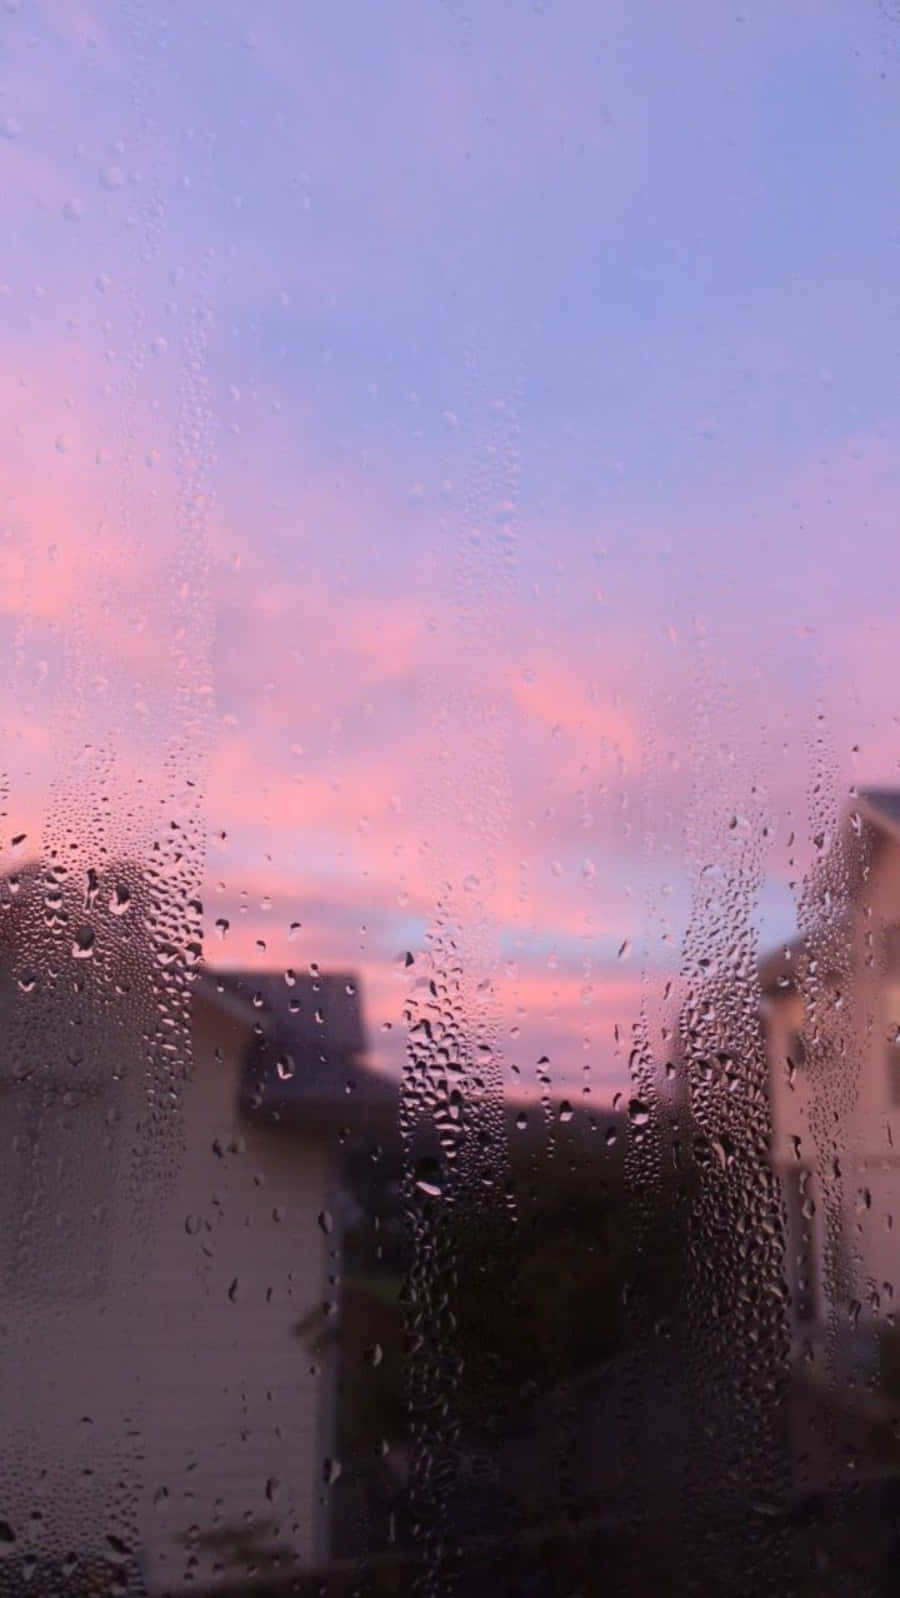 Aesthetic Rain And Purple-Pink Skies Wallpaper